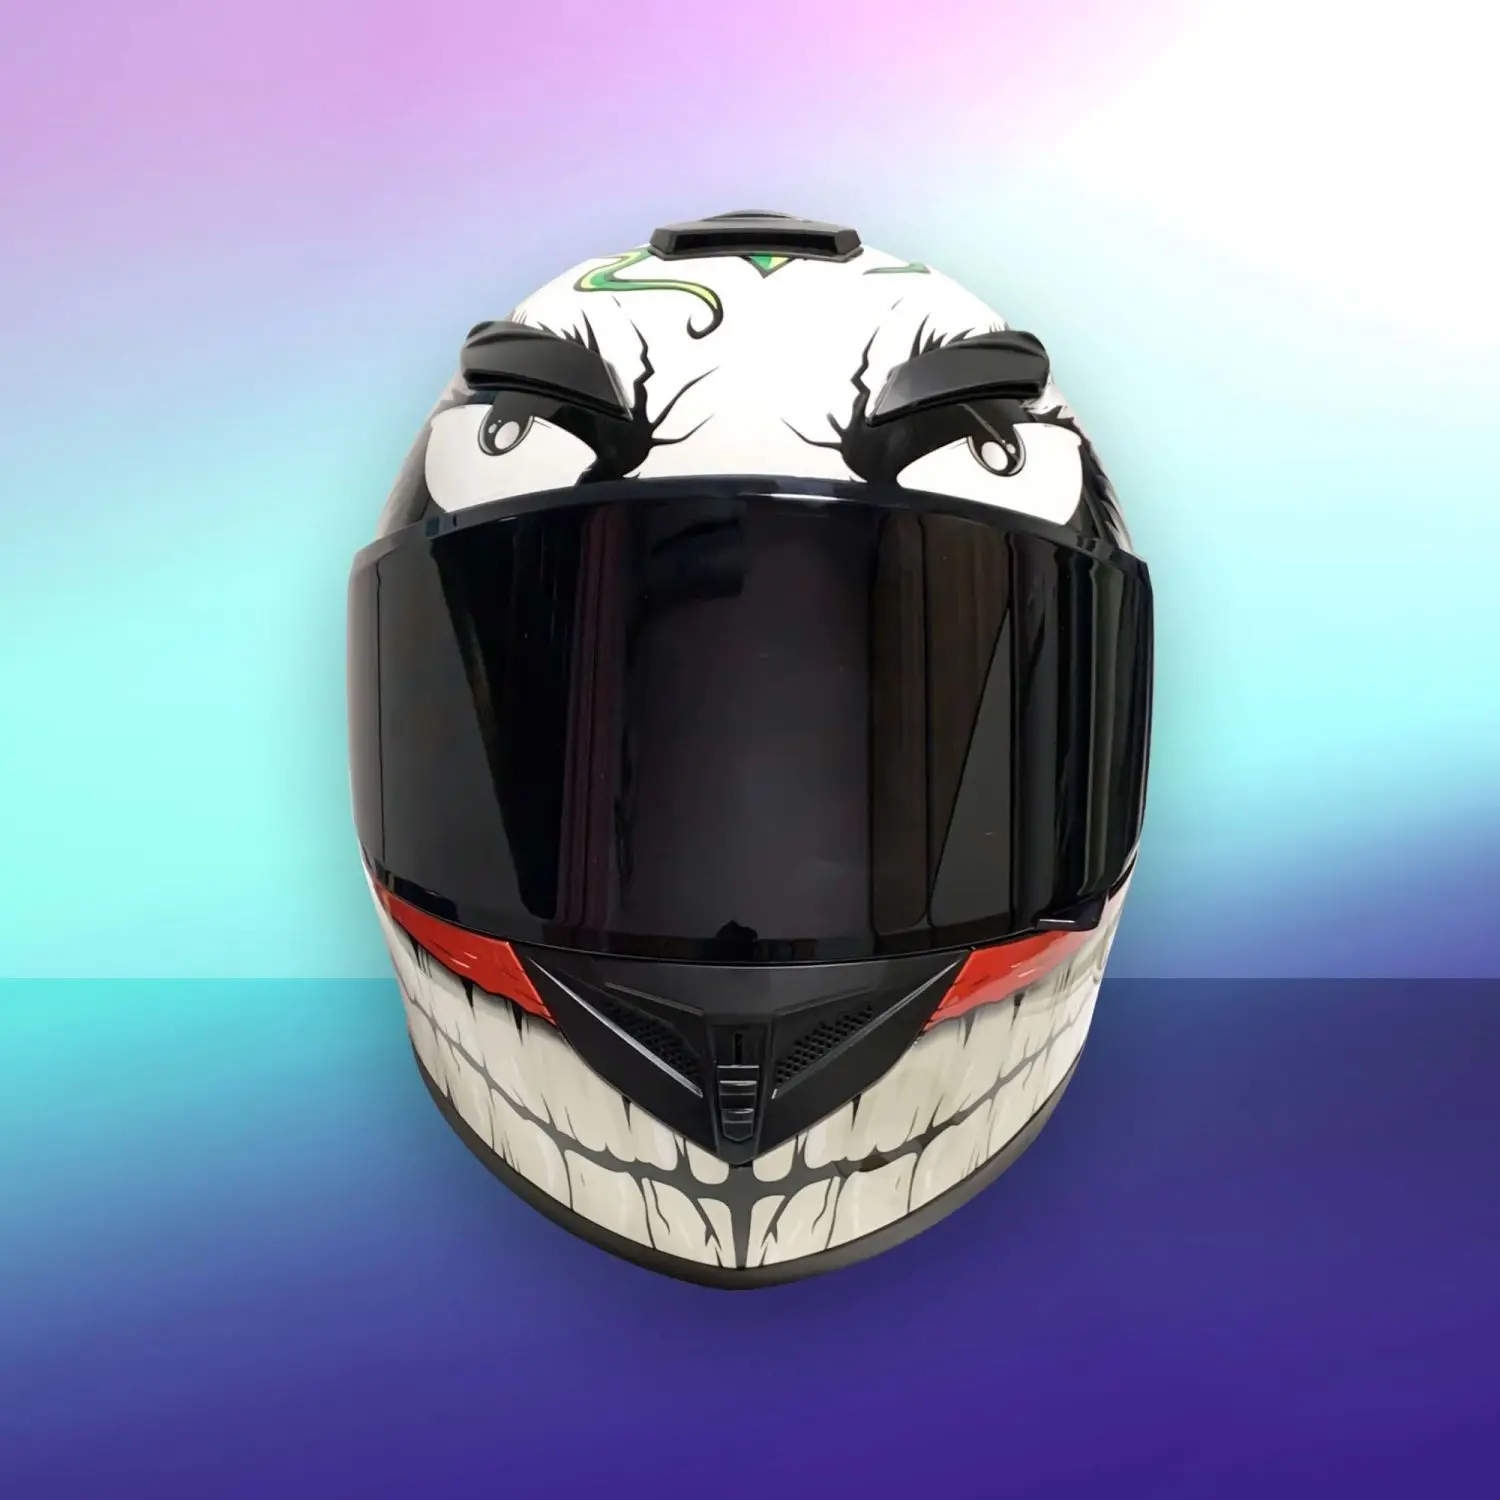 Joker Helmet Motorcycle Helmets Full Face Motorbike Biker Accessories Motocross Enduro Motoomami Racing Men's Free Shipping Moto enlarge